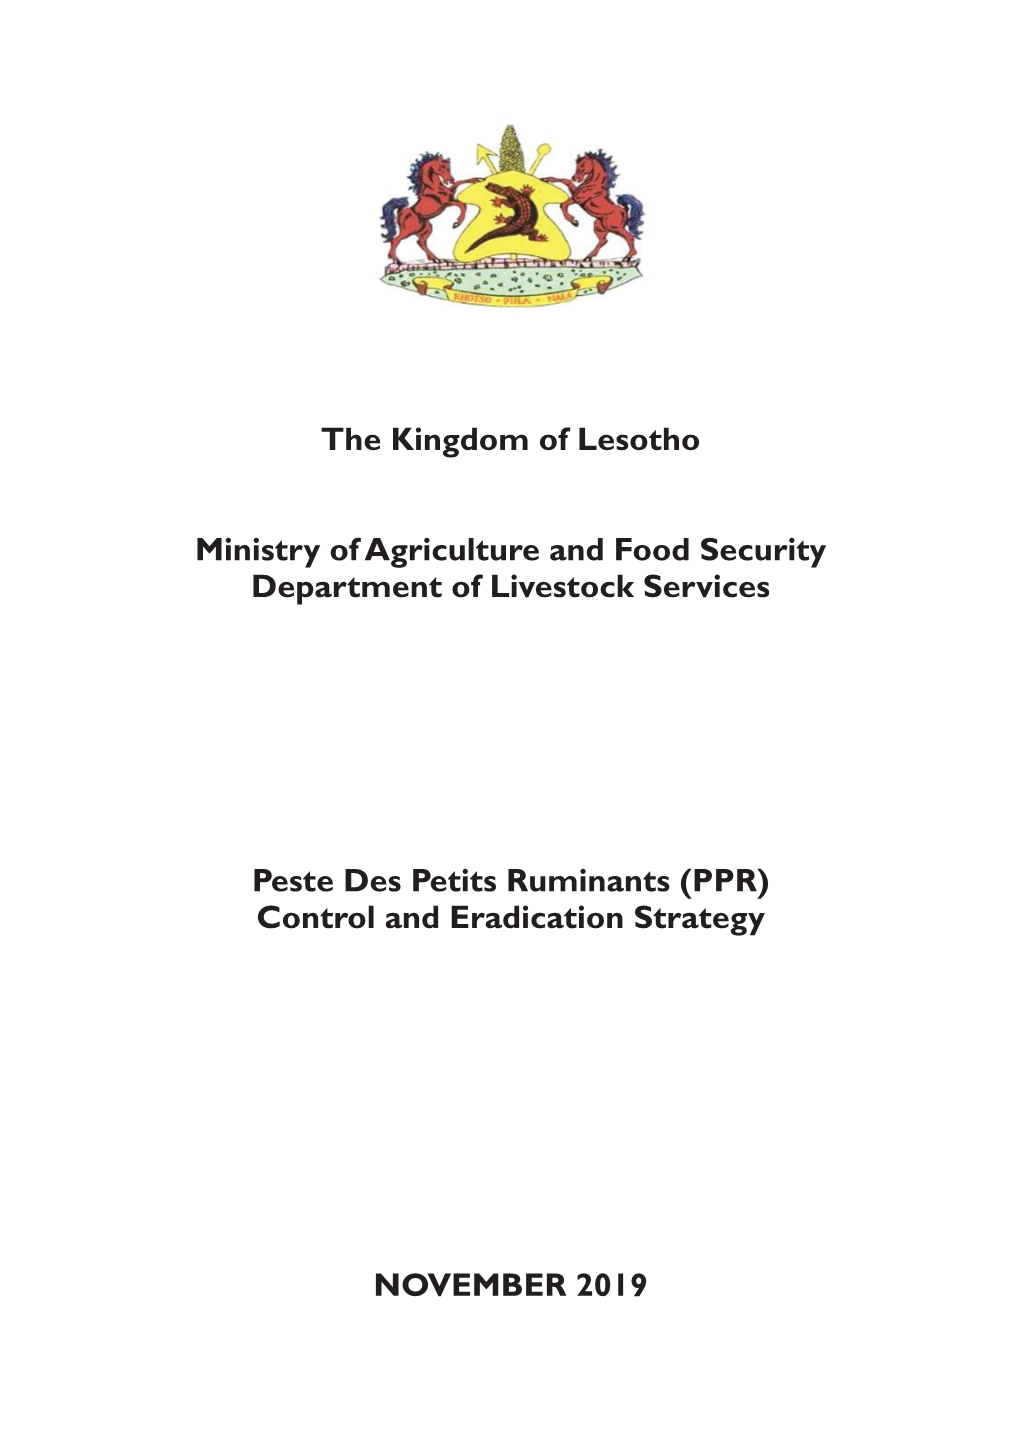 PPR Lesotho (1.003Mb)